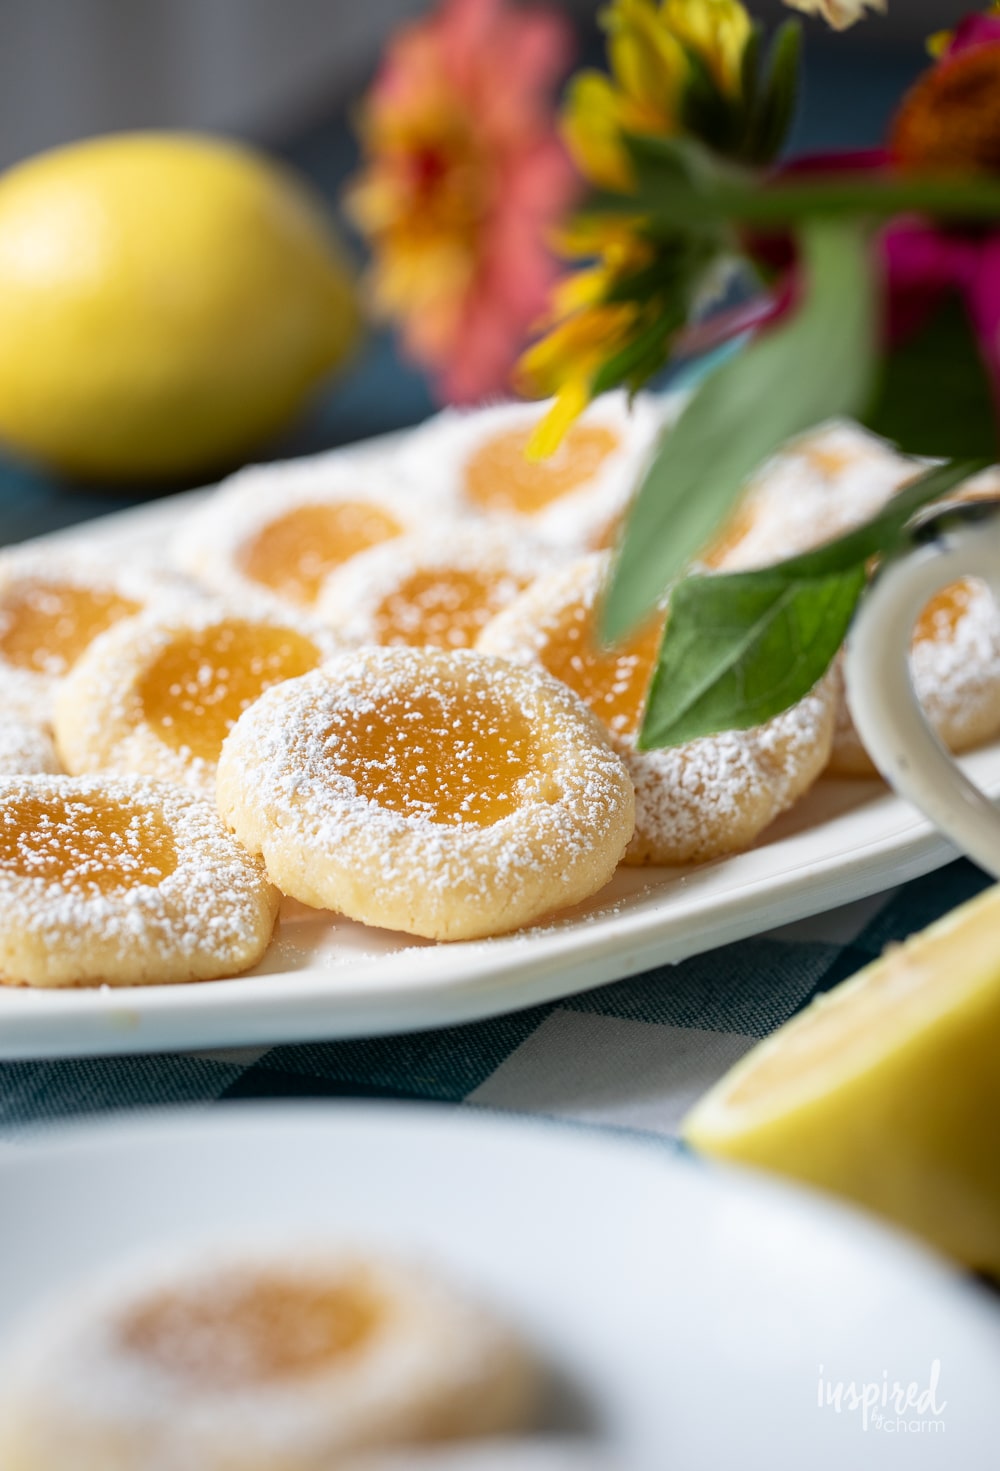 lemon curd cookies arranged in rows on a plate.